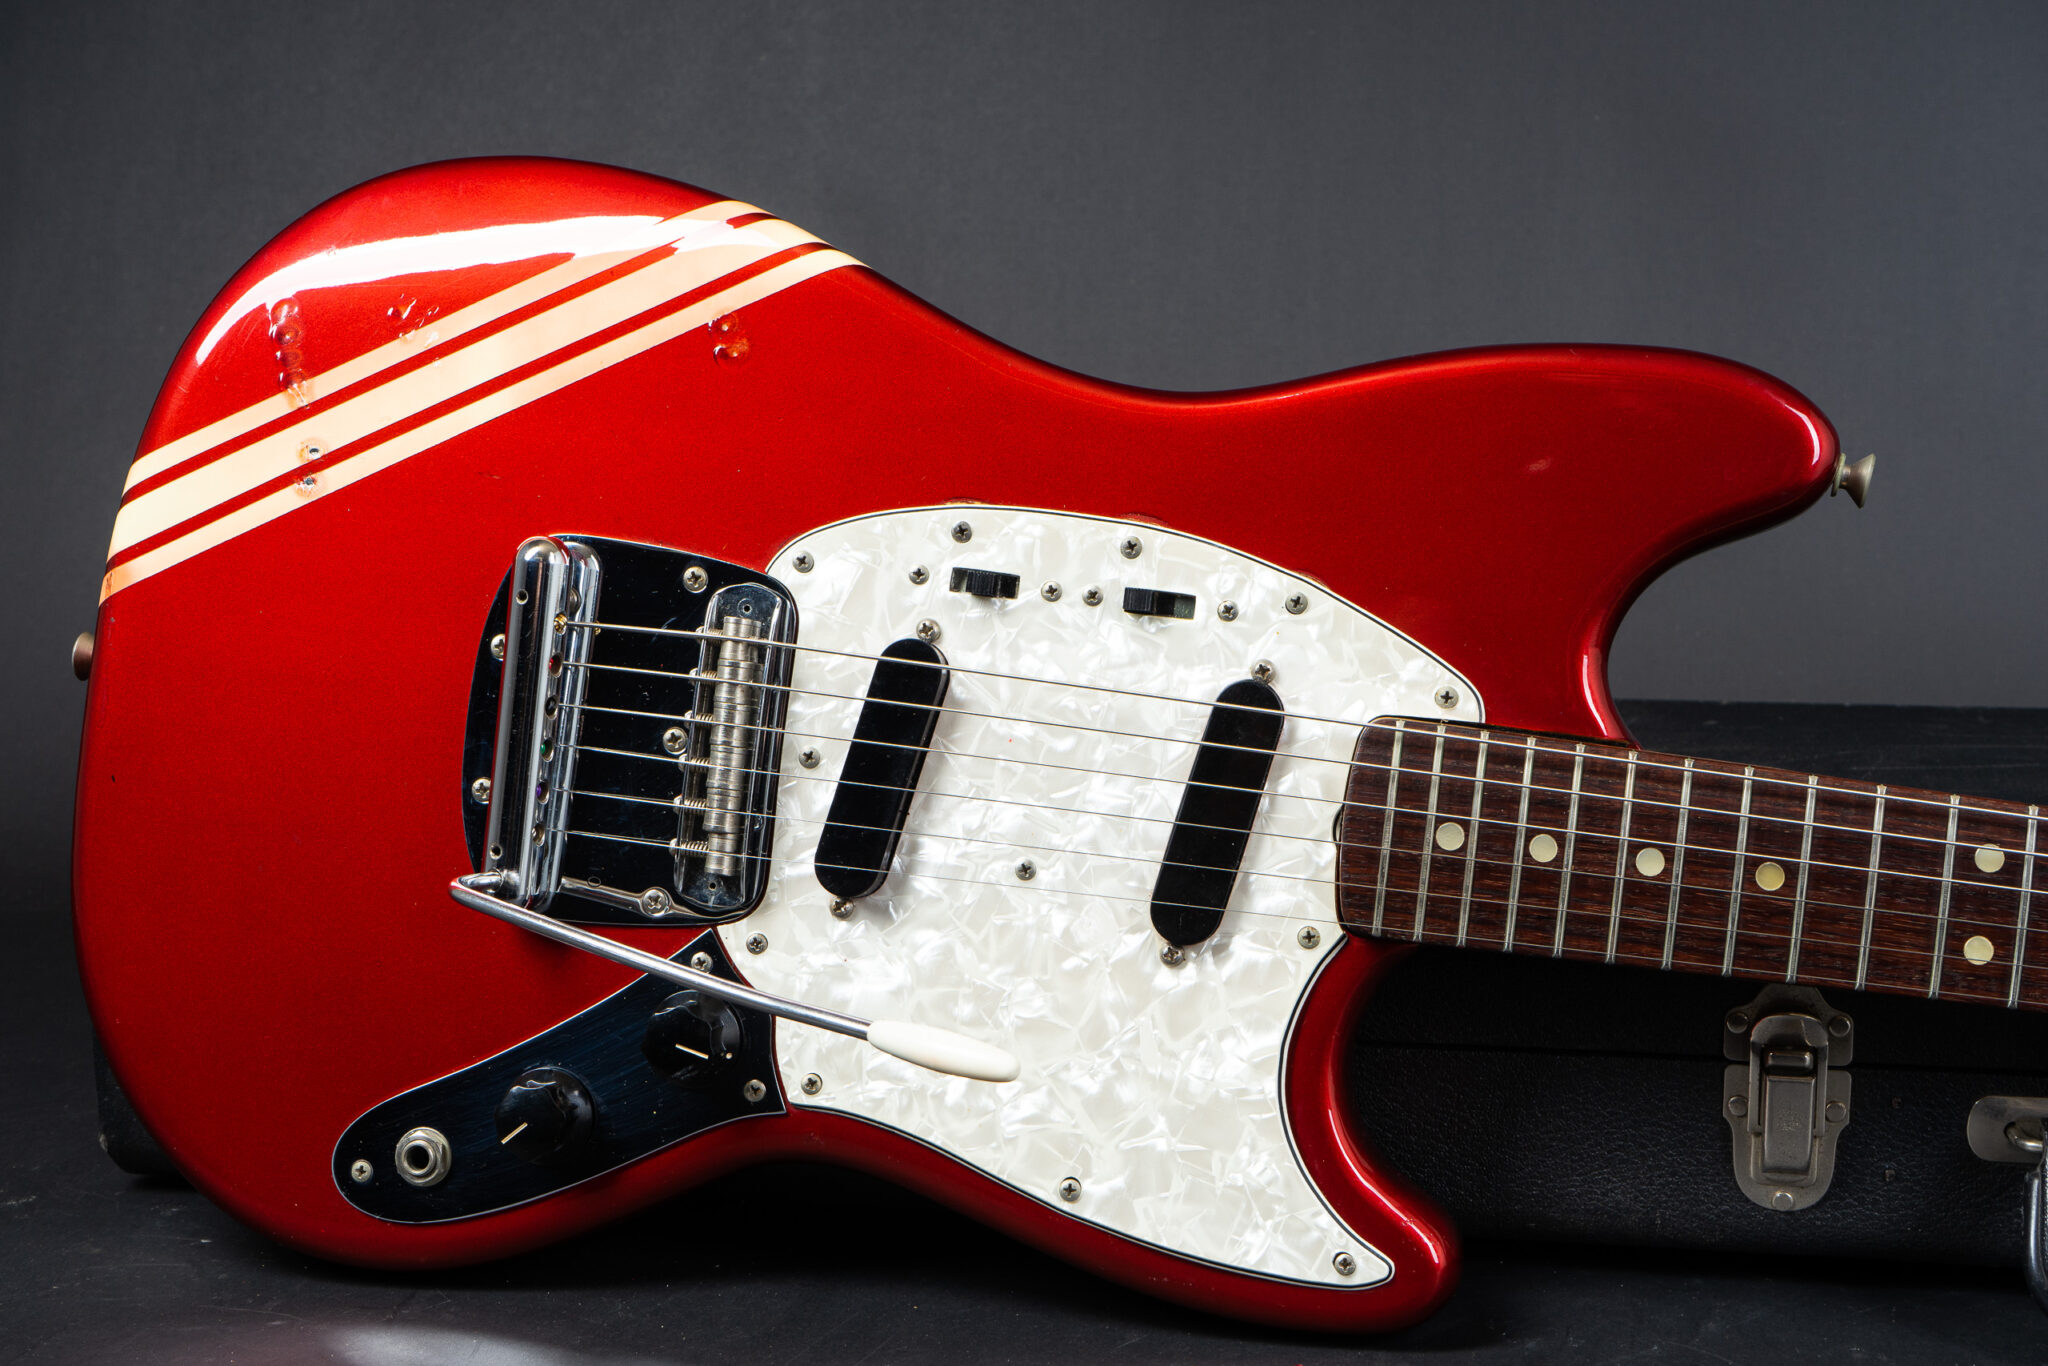 https://guitarpoint.de/app/uploads/products/1972-fender-mustang-competition-red/1972-Fender-Mustang-Competition-Red-347339-9-2048x1366.jpg